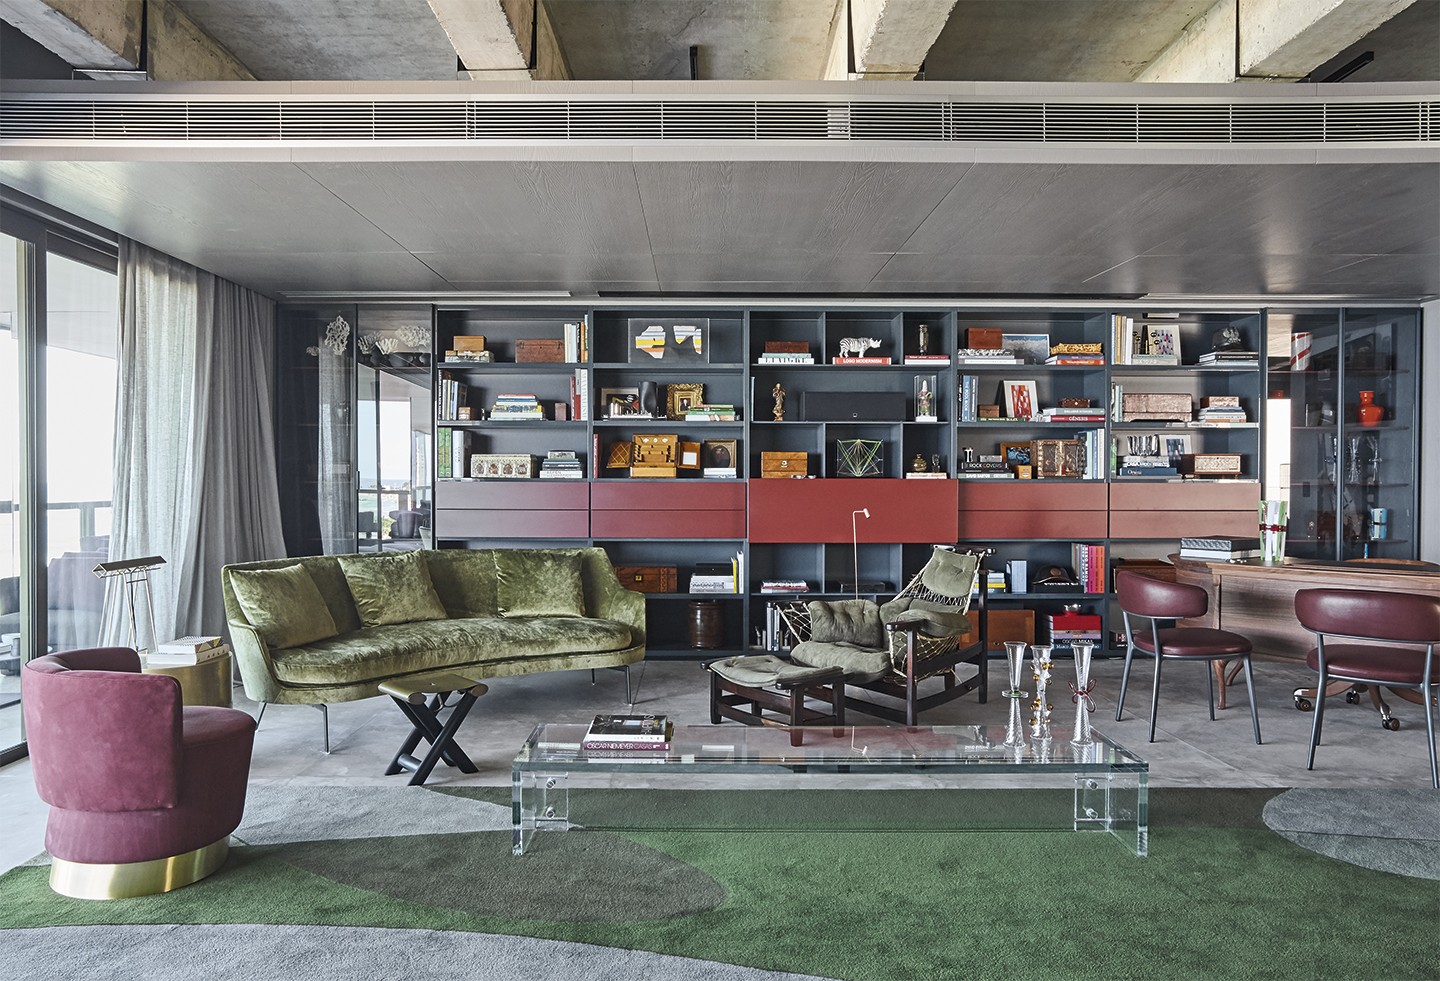 Colorido elegante se destaca neste apartamento projetado por David Bastos (Foto: Ilana Bessler)